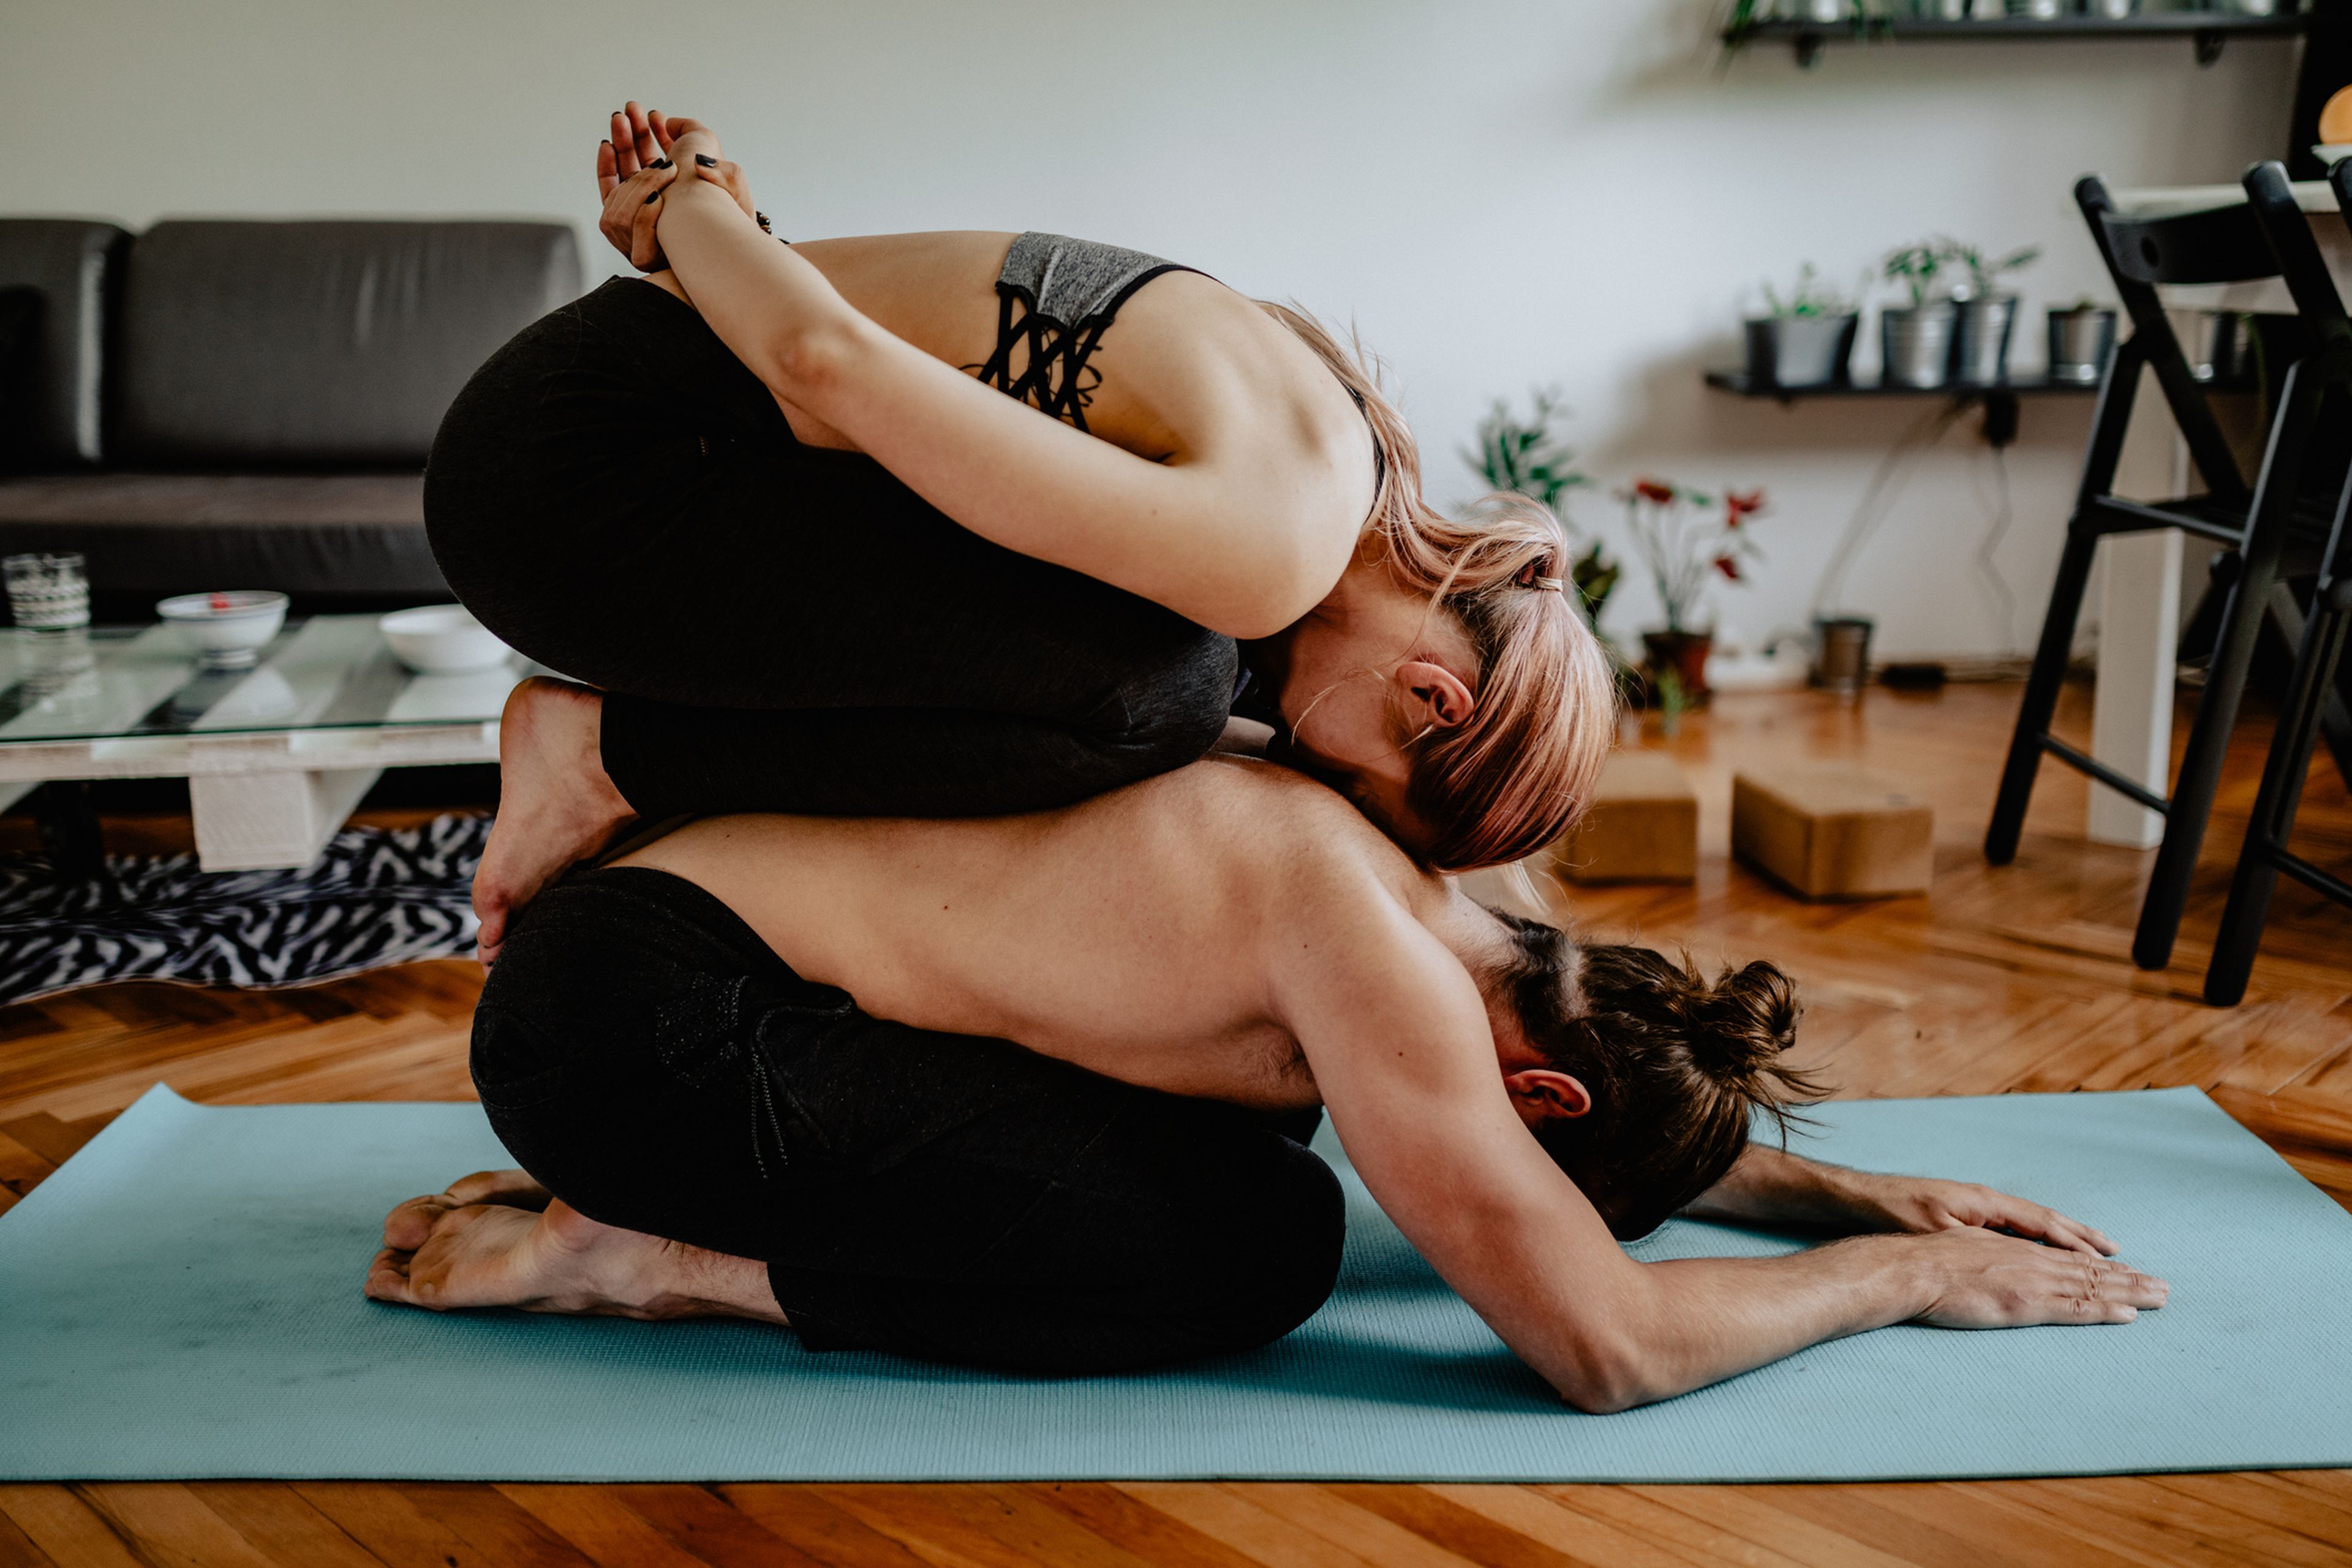 Yoga en pareja